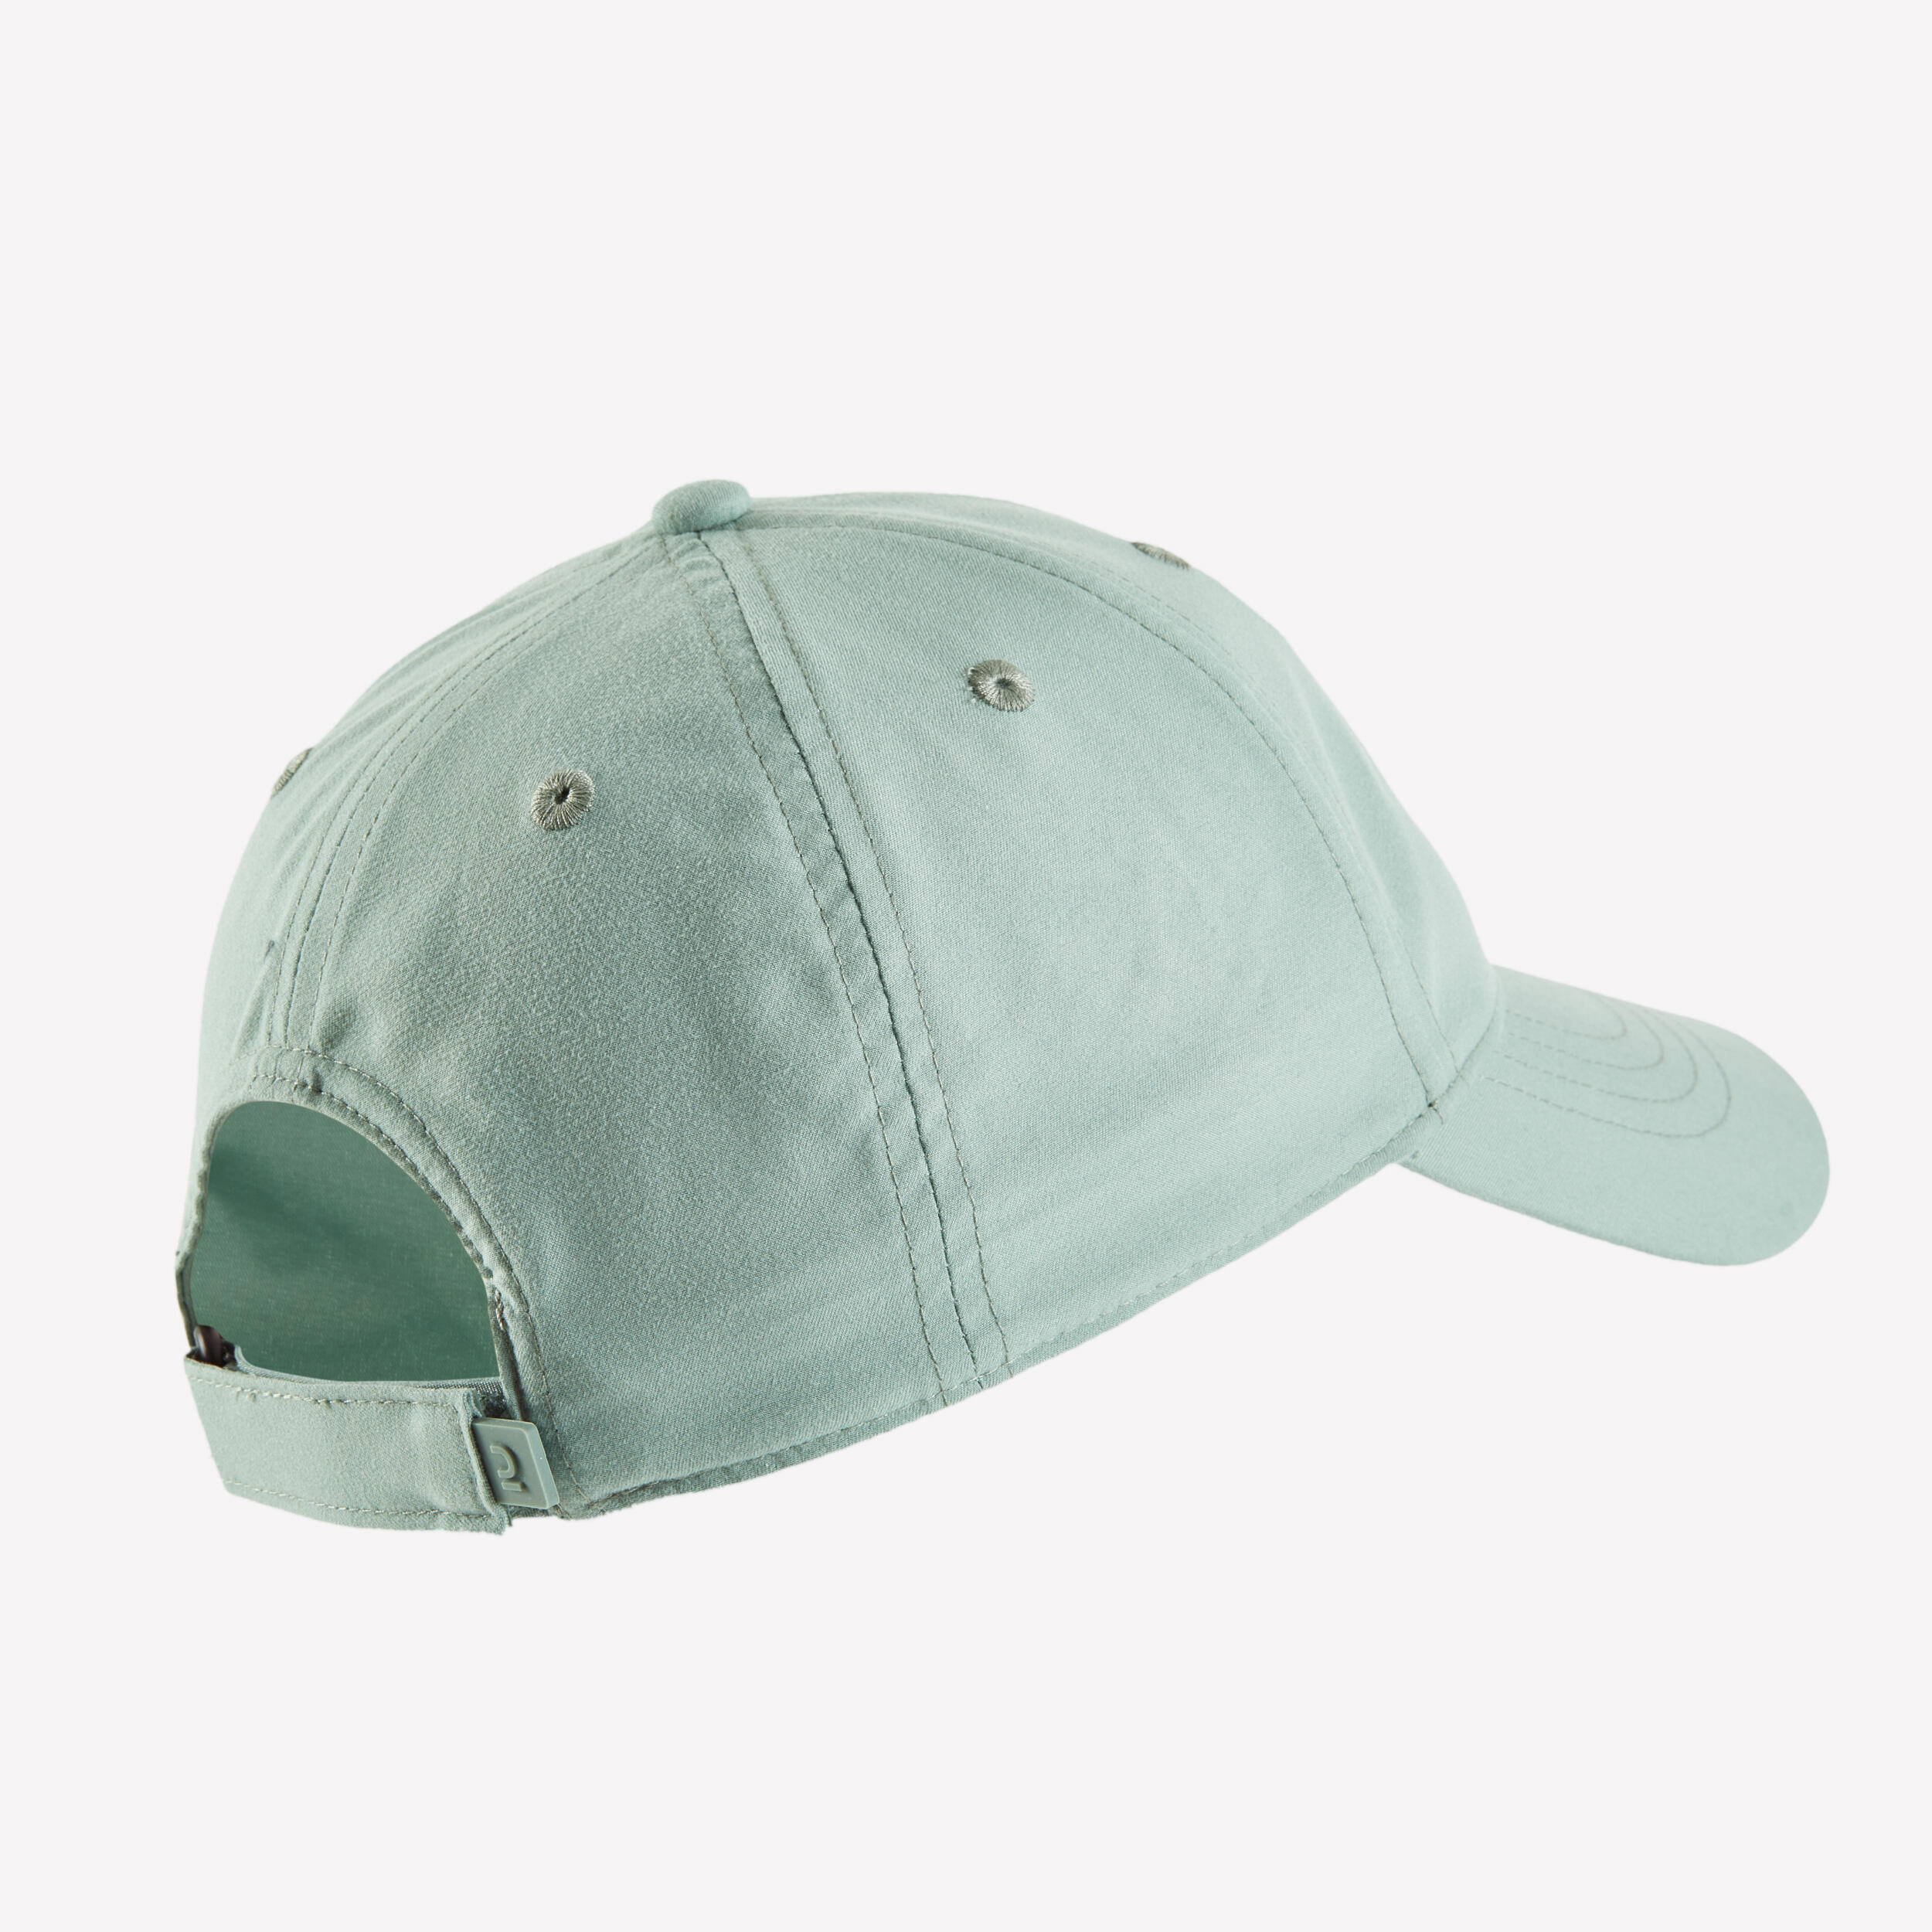 Tennis Cap Size 54 TC 500 - Green With Logo 4/4